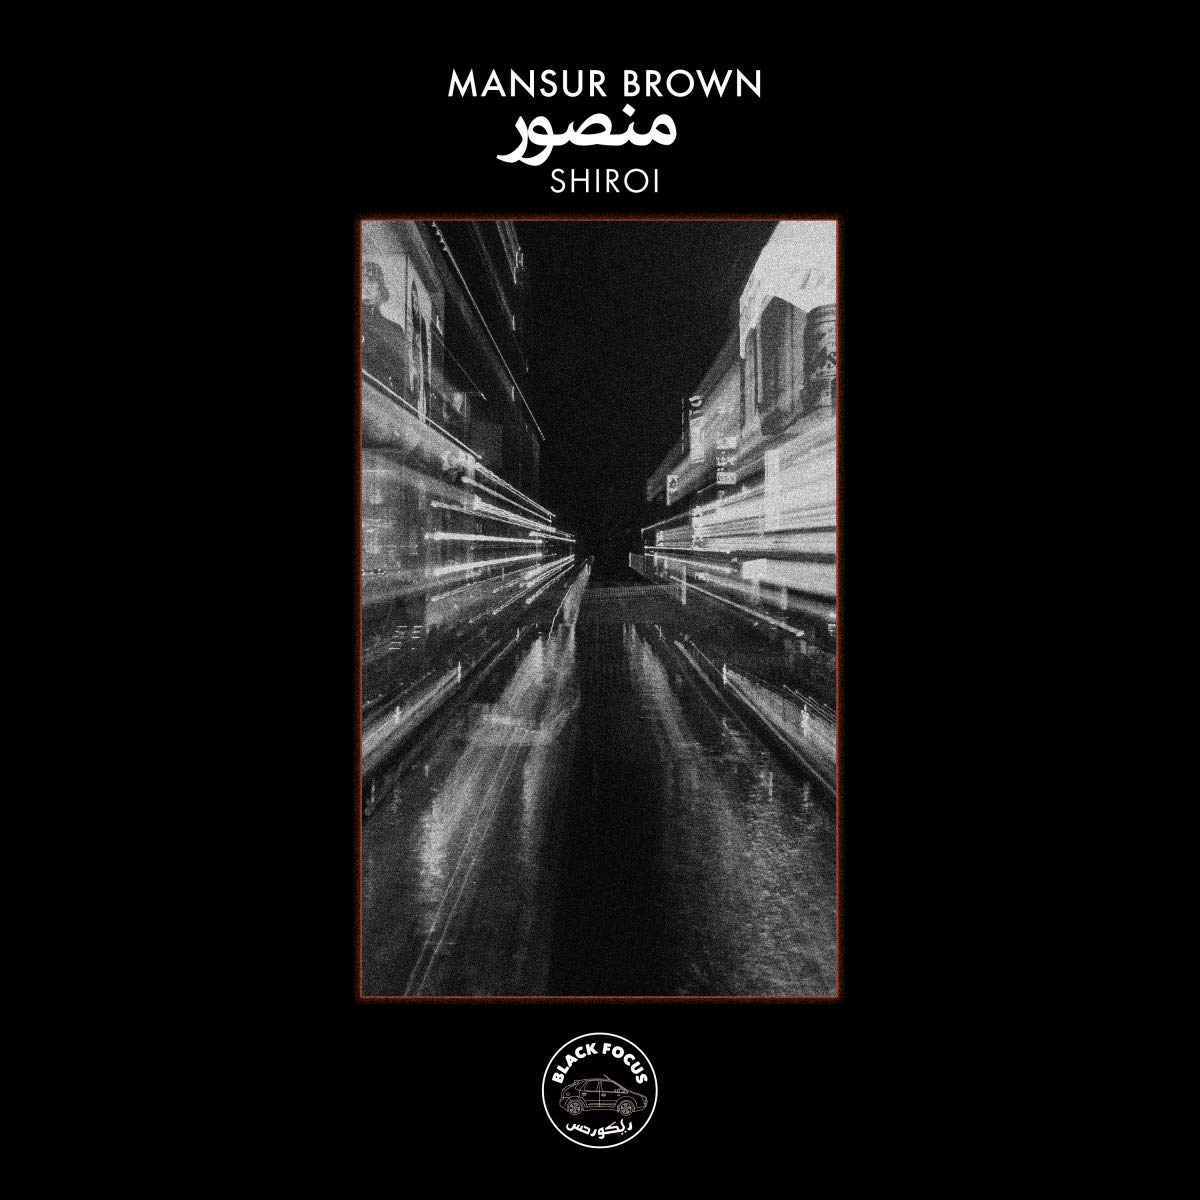 Mansur Brown - Shiroi | Upcoming Vinyl (November 23, 2018)